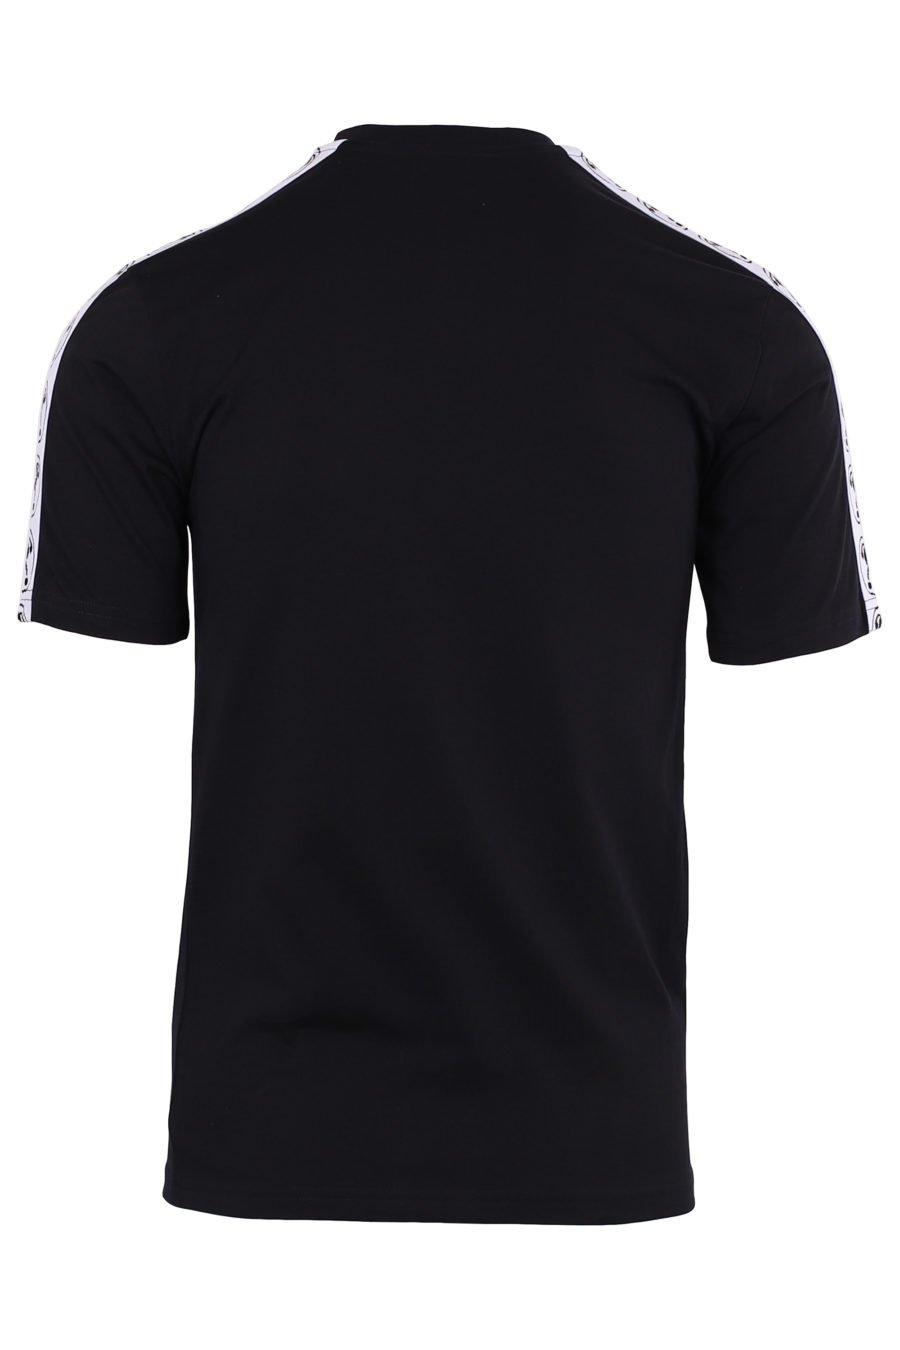 Camiseta negra logo blanco parte delantera y mangas - IMG 9987